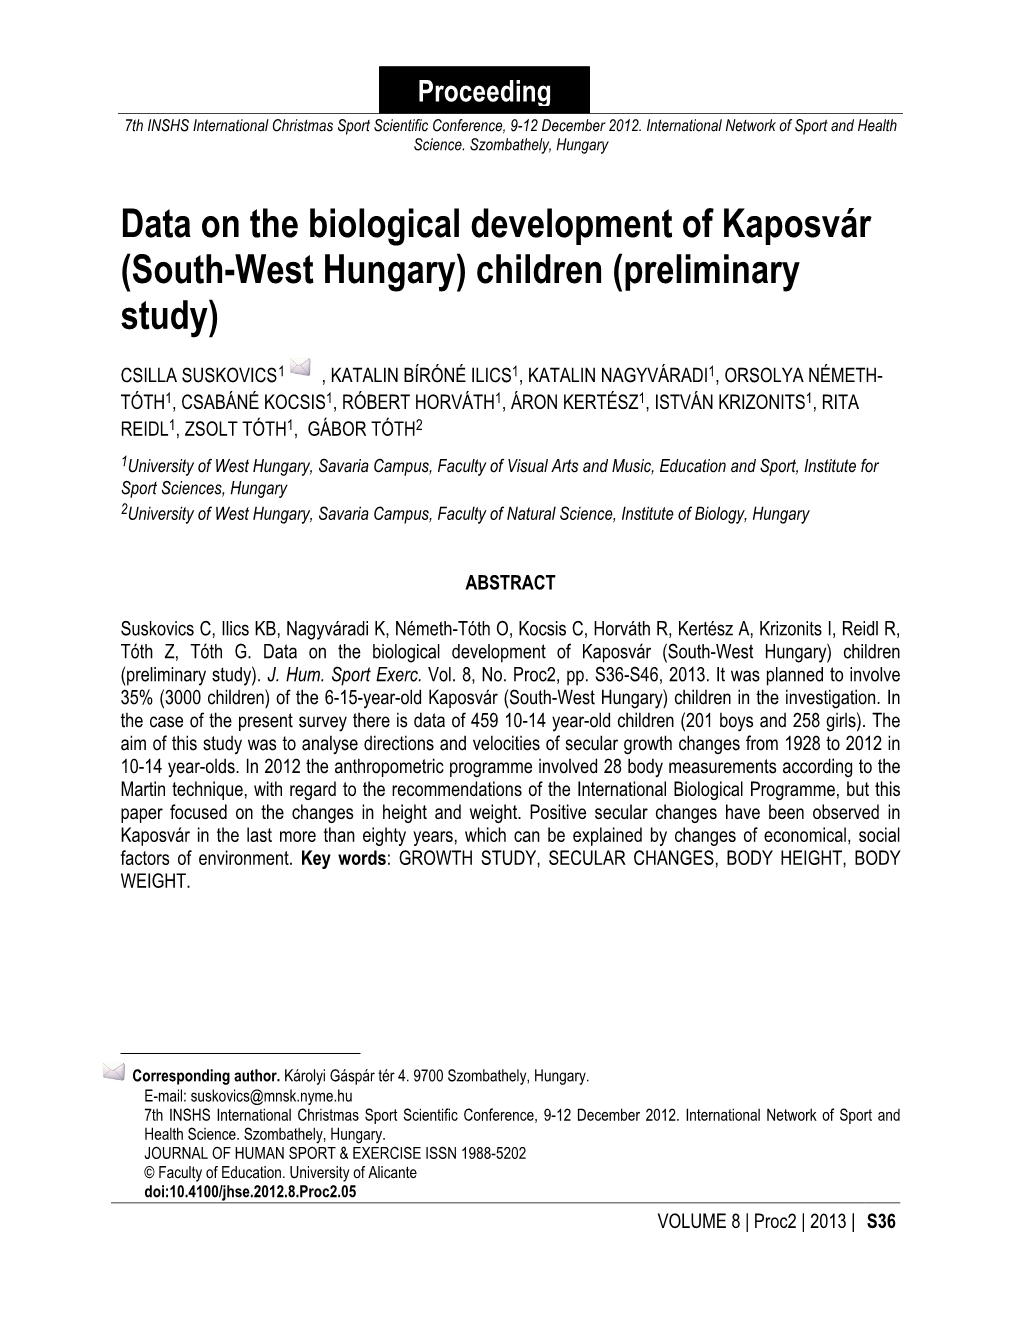 Data on the Biological Development of Kaposvár (South-West Hungary) Children (Preliminary Study)